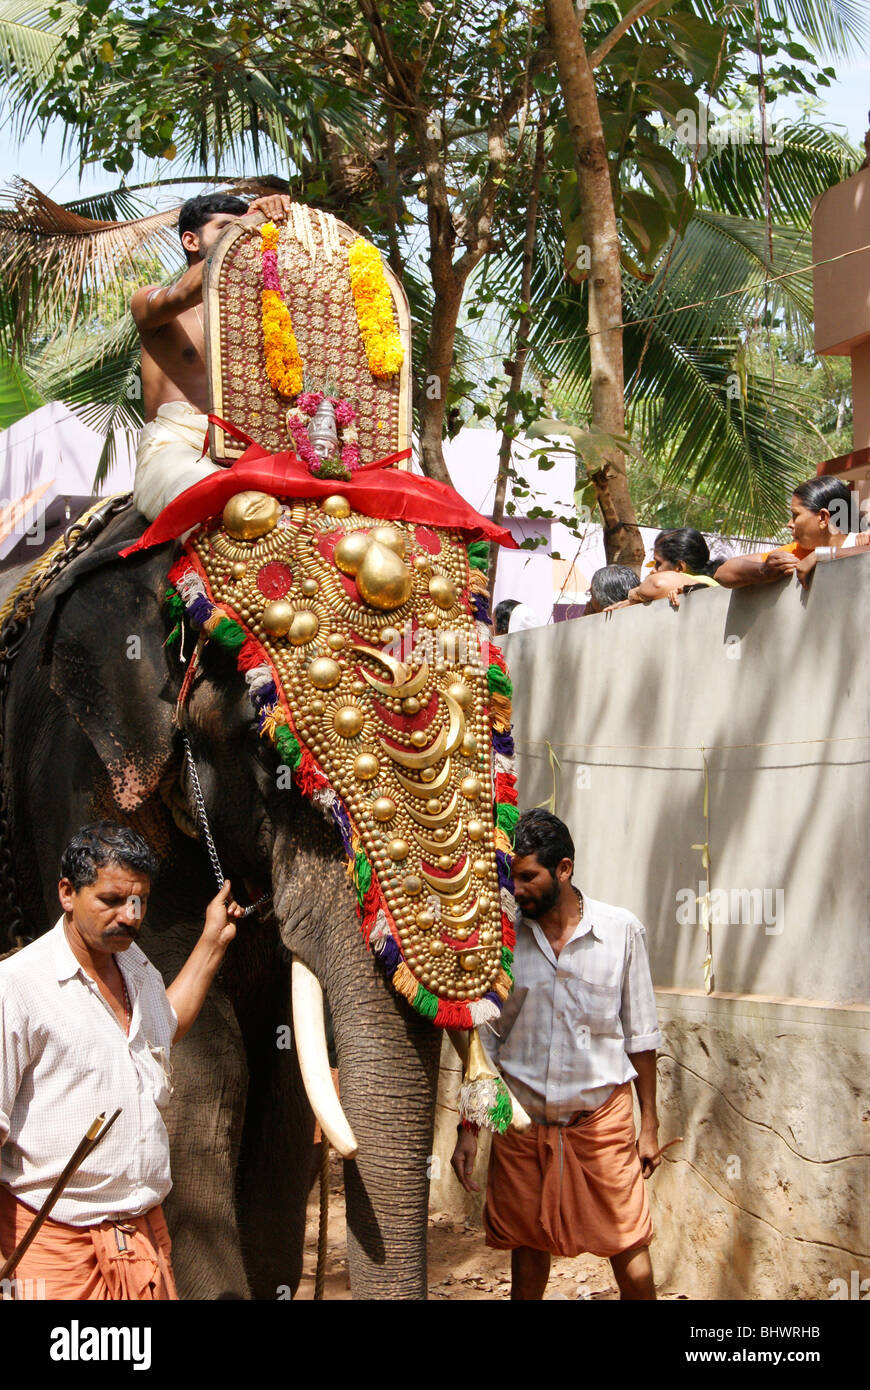 Thaipooya Mahotsavam festival caparisoned elephant arriving.Scene from Hindu Temple Festival at Kerala,India Stock Photo